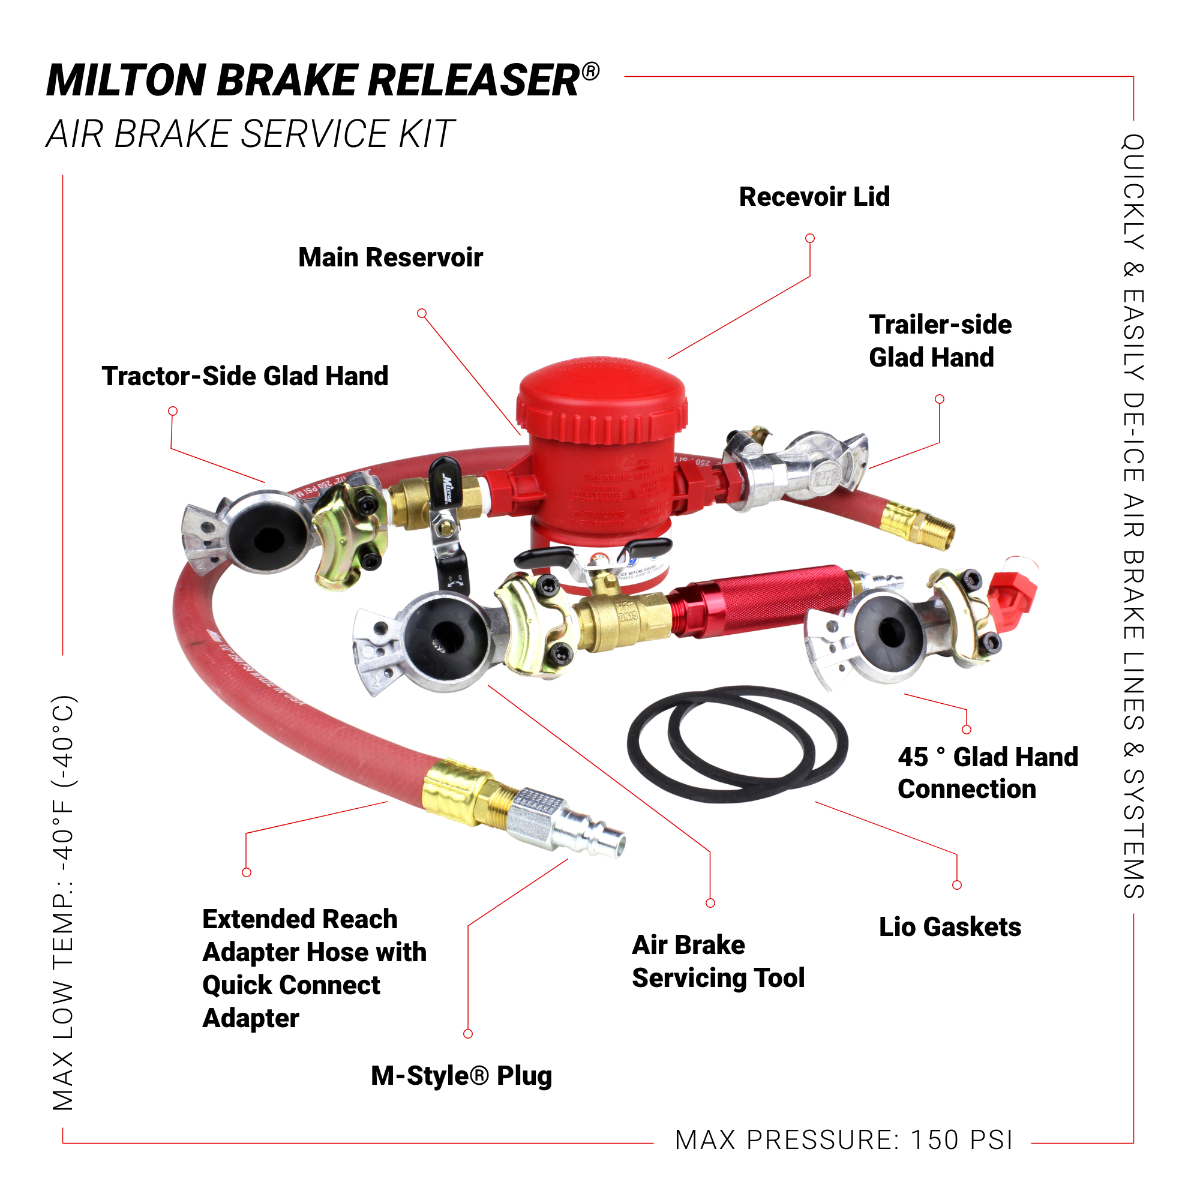 Brake Releaser® Air Brake Service Kit